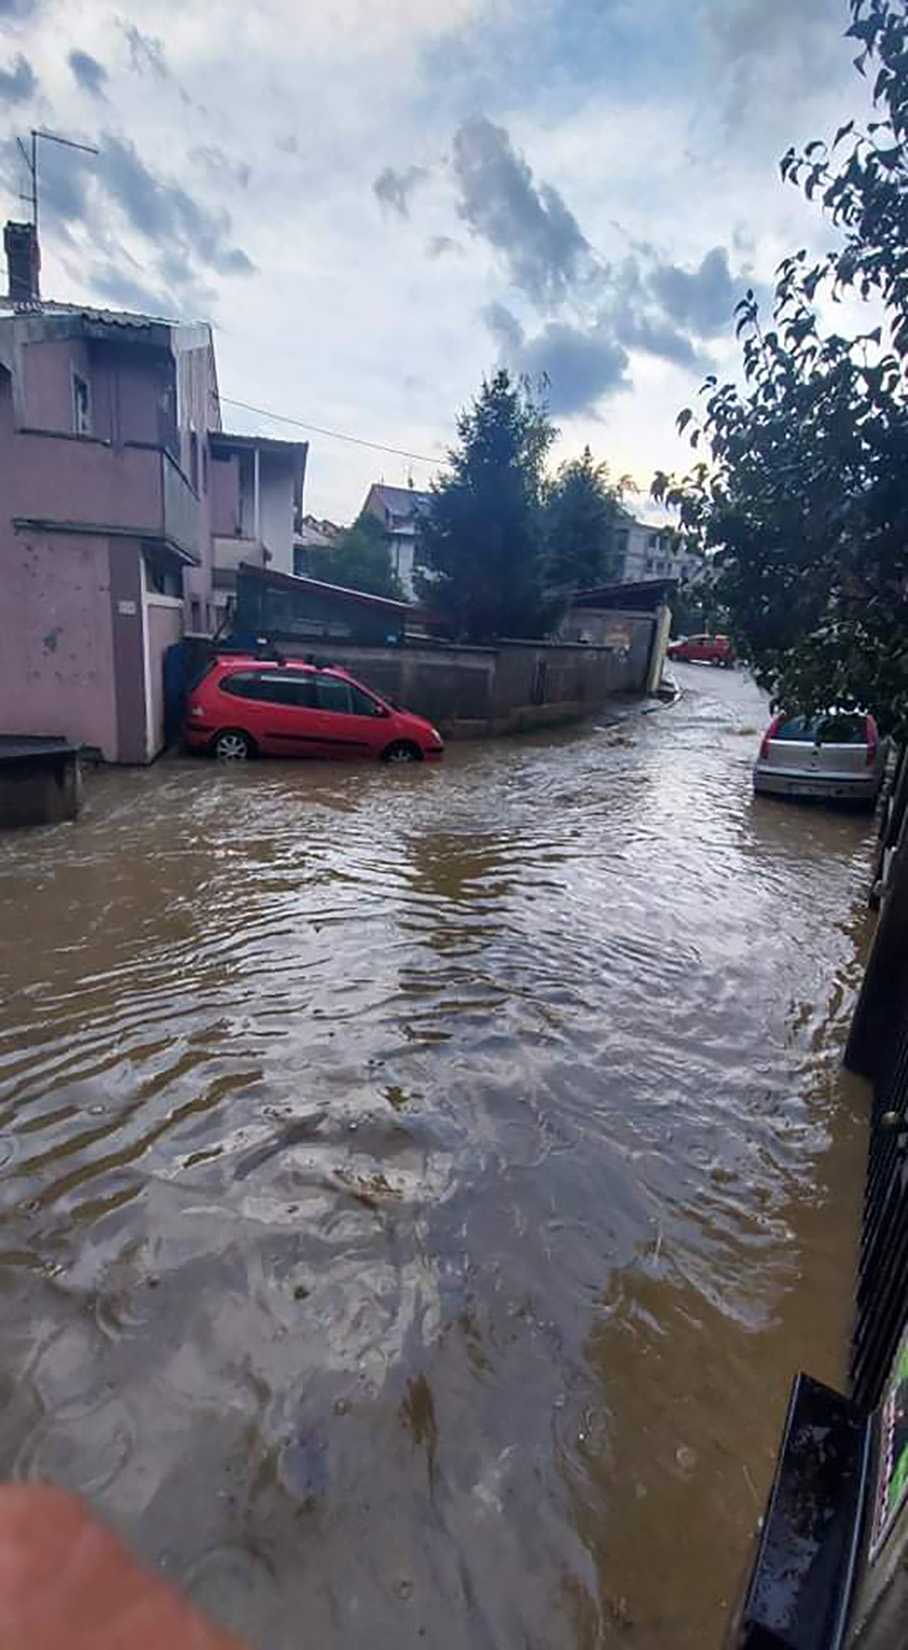 Naselje Vojvode Vlahovića, kiša, nevreme, poplava, voda, reka